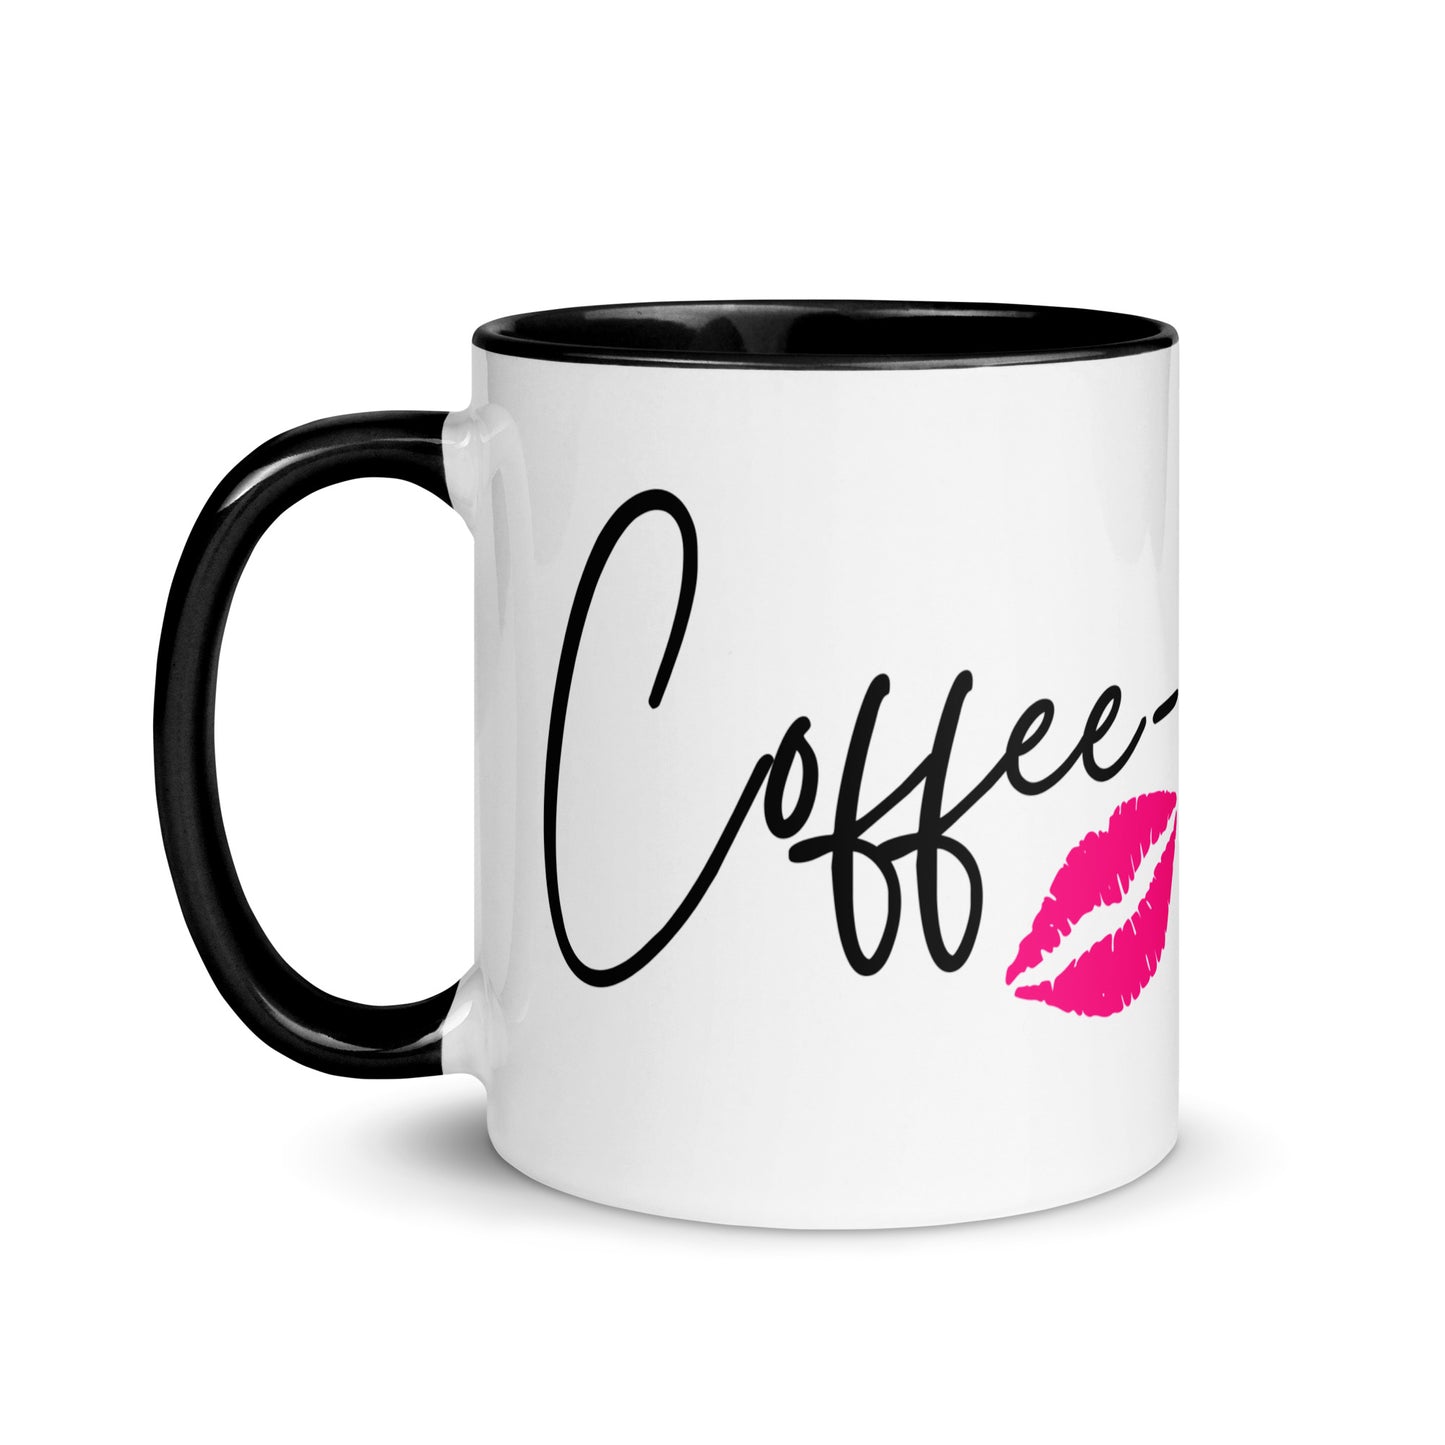 Coffeespiration Mug with Color Inside